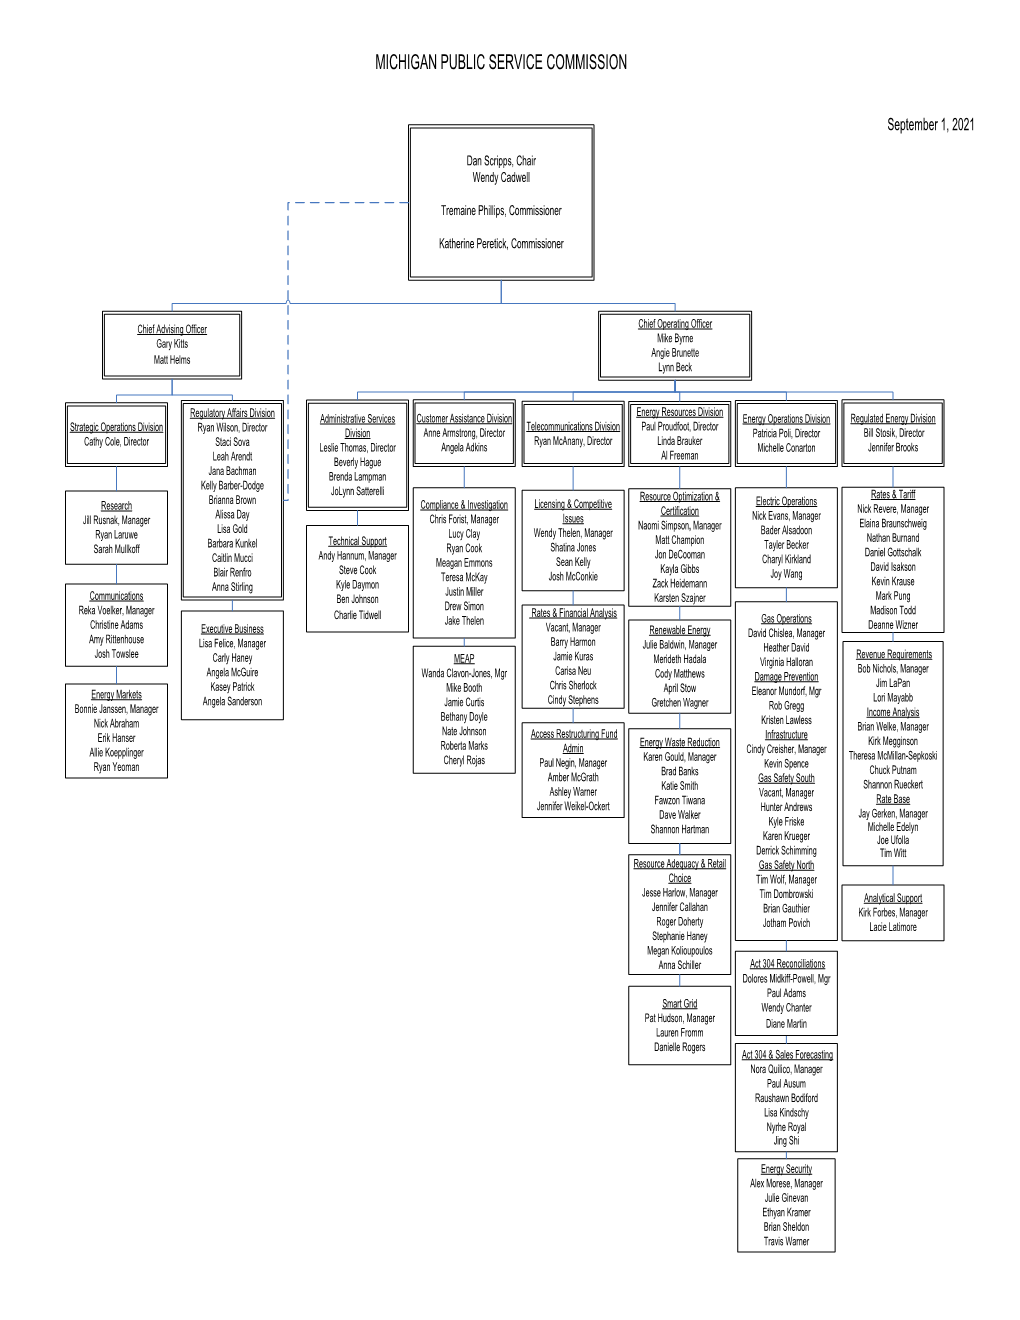 MPSC Division Organizational Chart